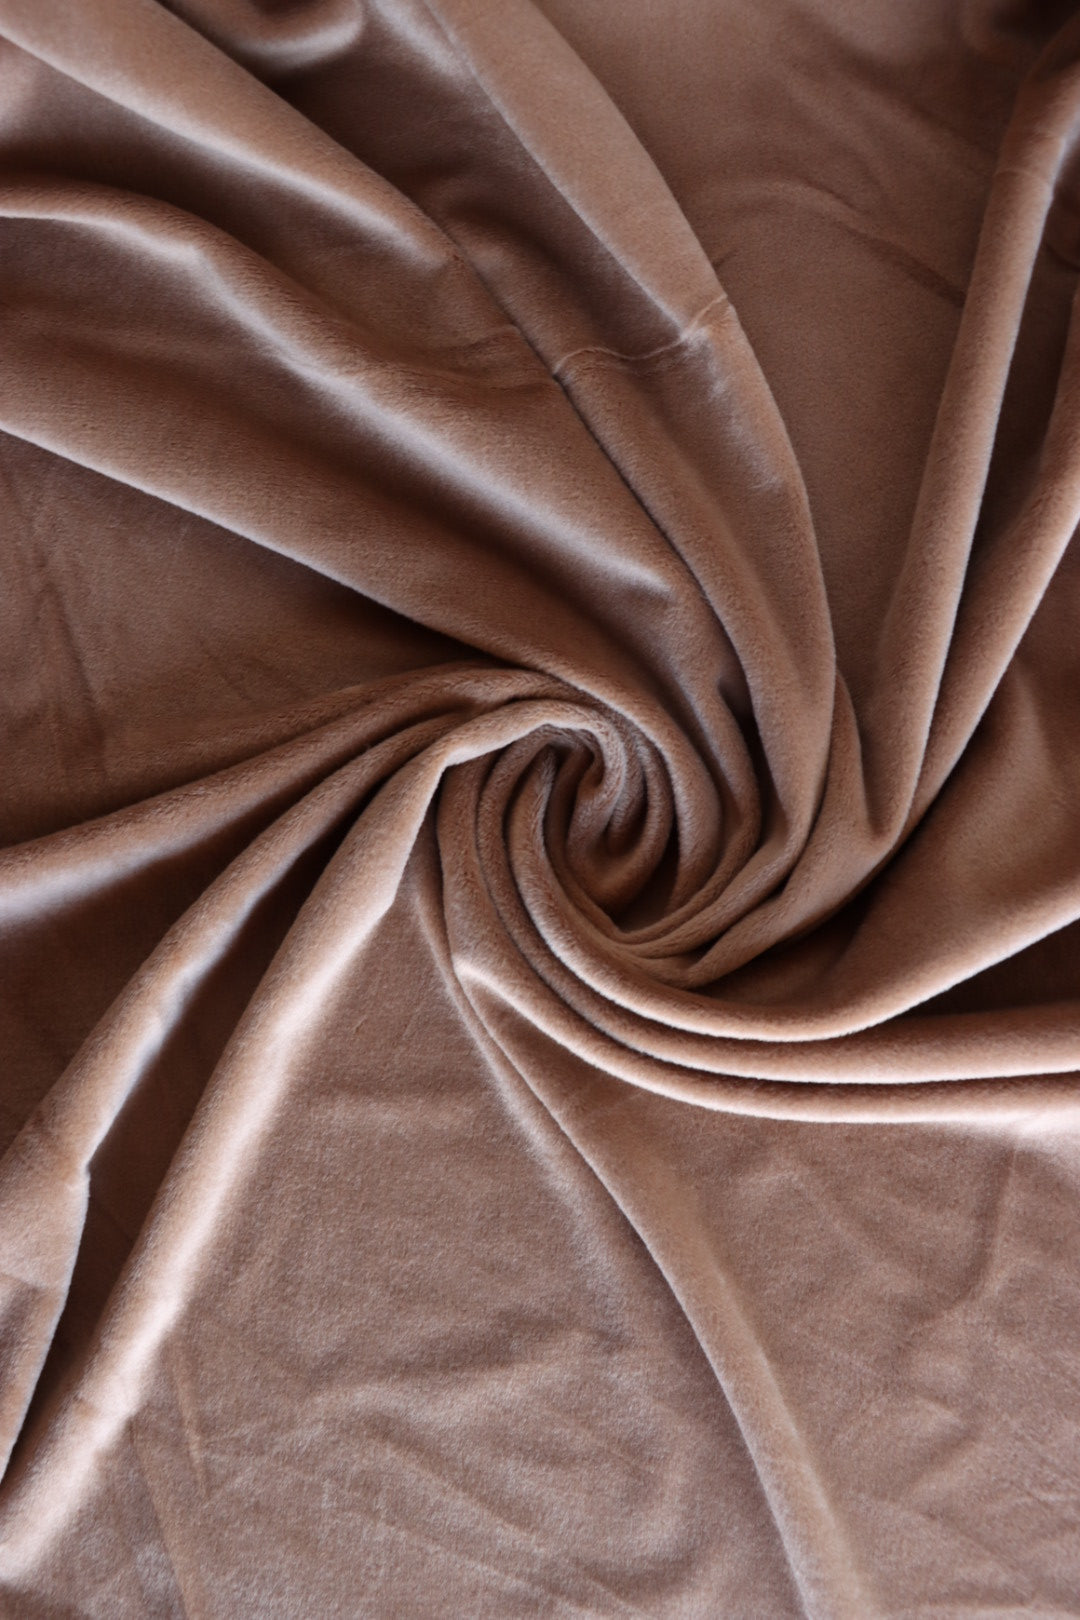 Stretch Velvet Fabric - Fuchsia / Yard Many Colors Available